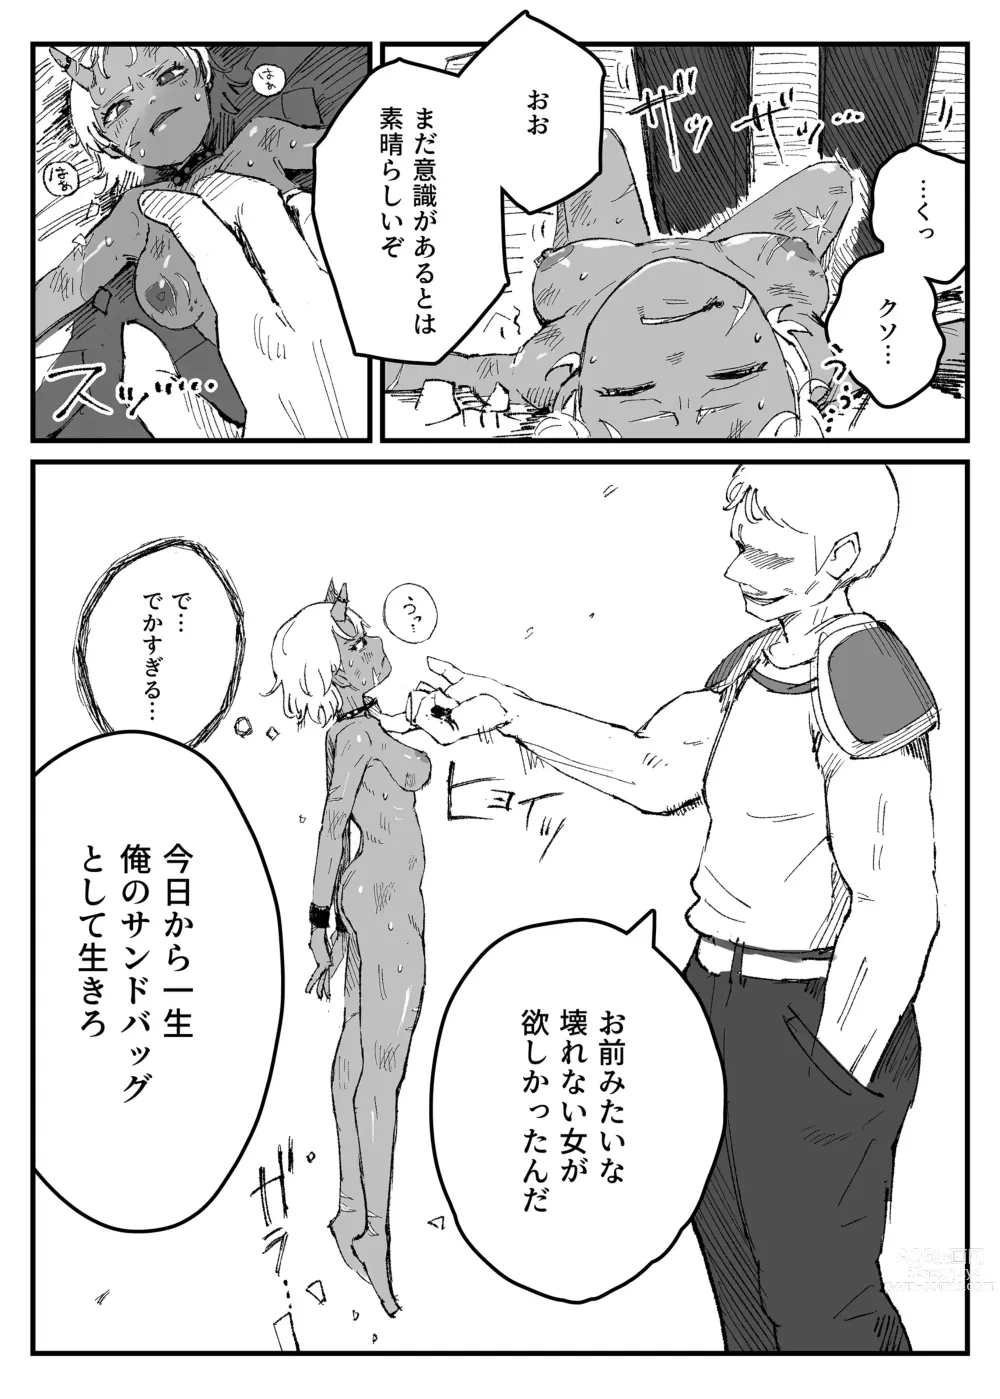 Page 4 of doujinshi Ogress instinct